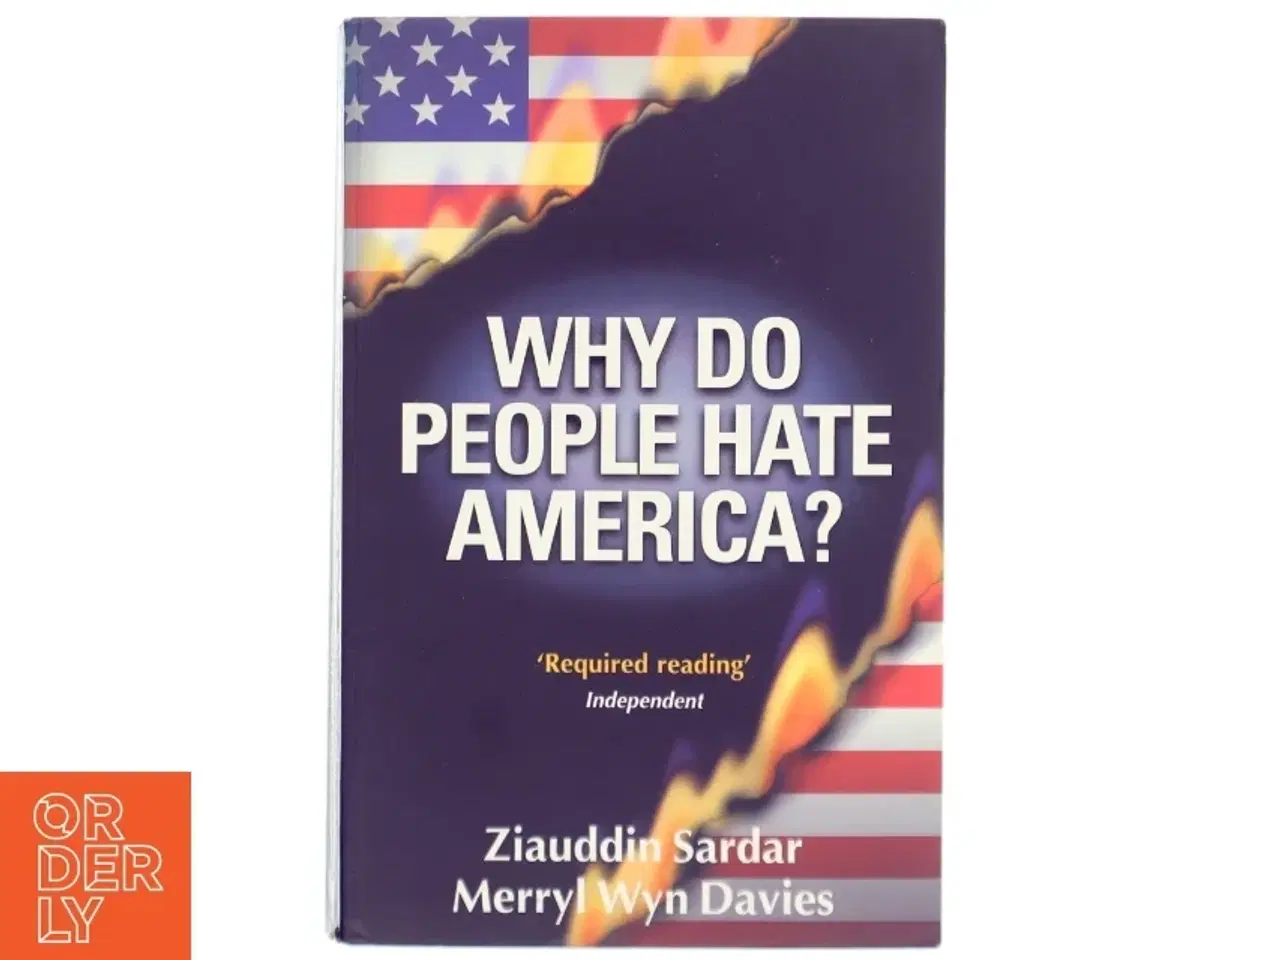 Billede 1 - 'Why do people hate America?' By Ziauddin Sardar and Merryl Wyn Davies (bog)